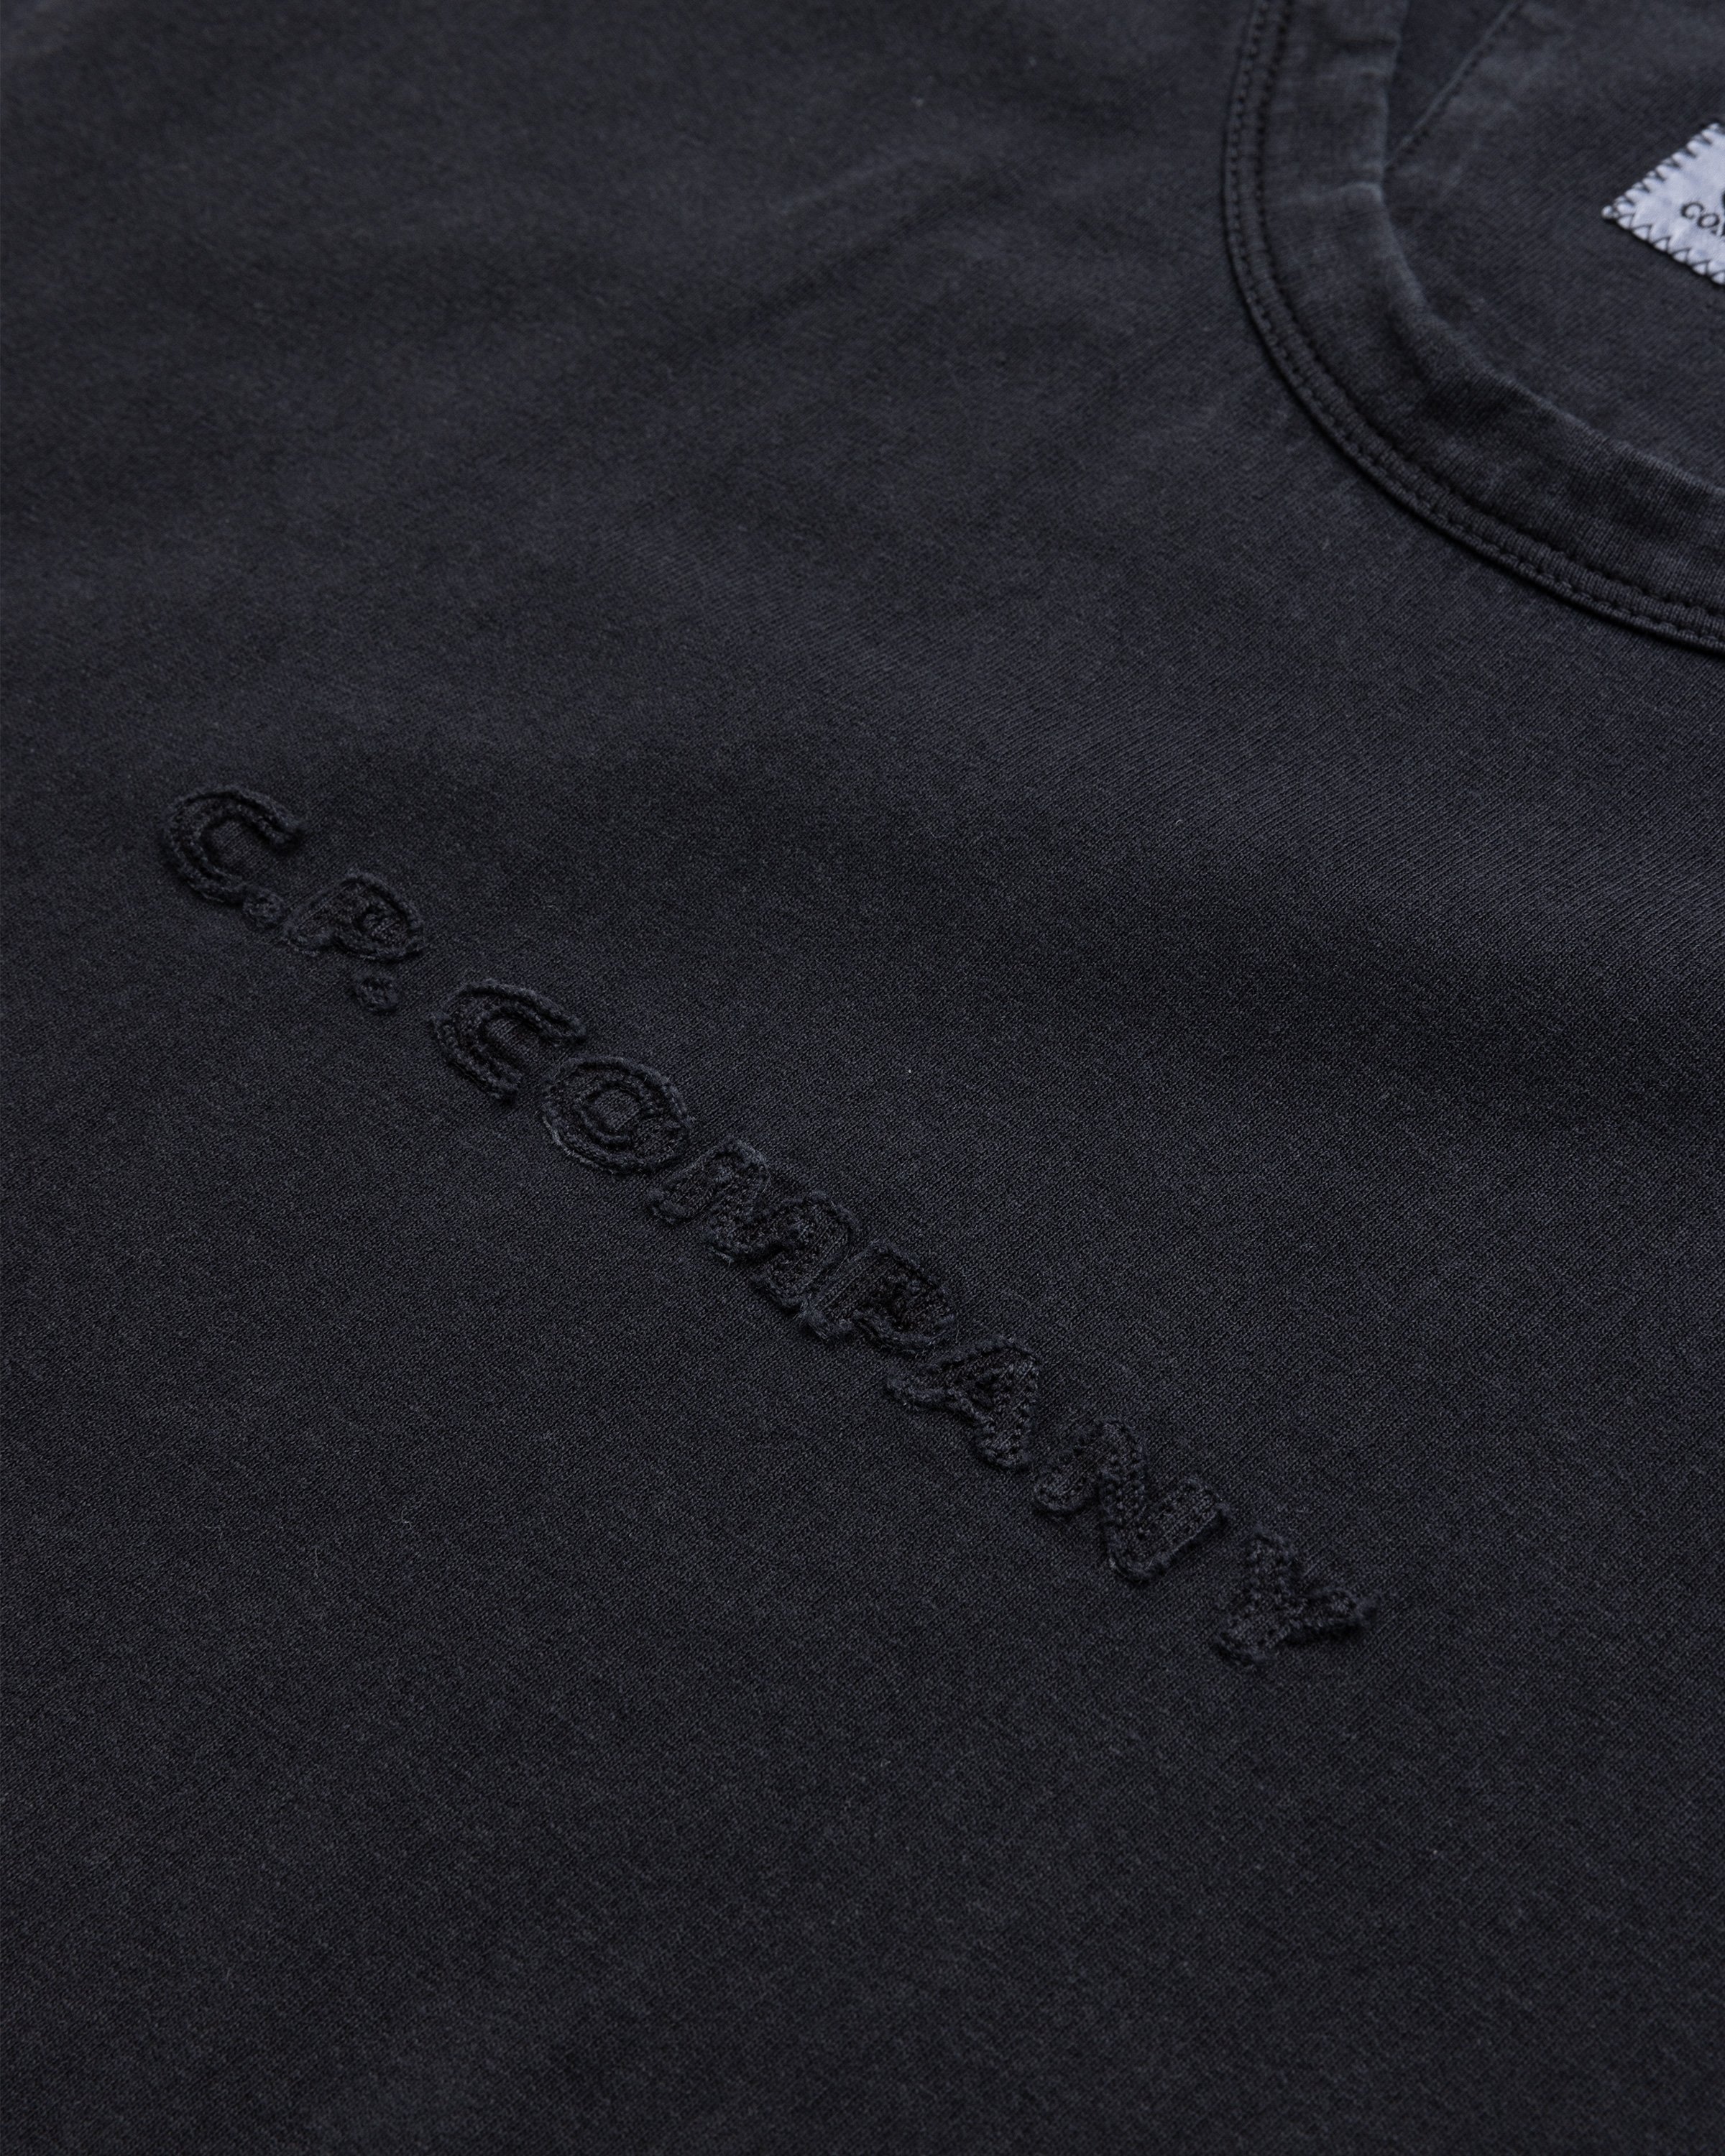 C.P. Company - 1020 Jersey Logo T-Shirt Black - Clothing - Black - Image 5